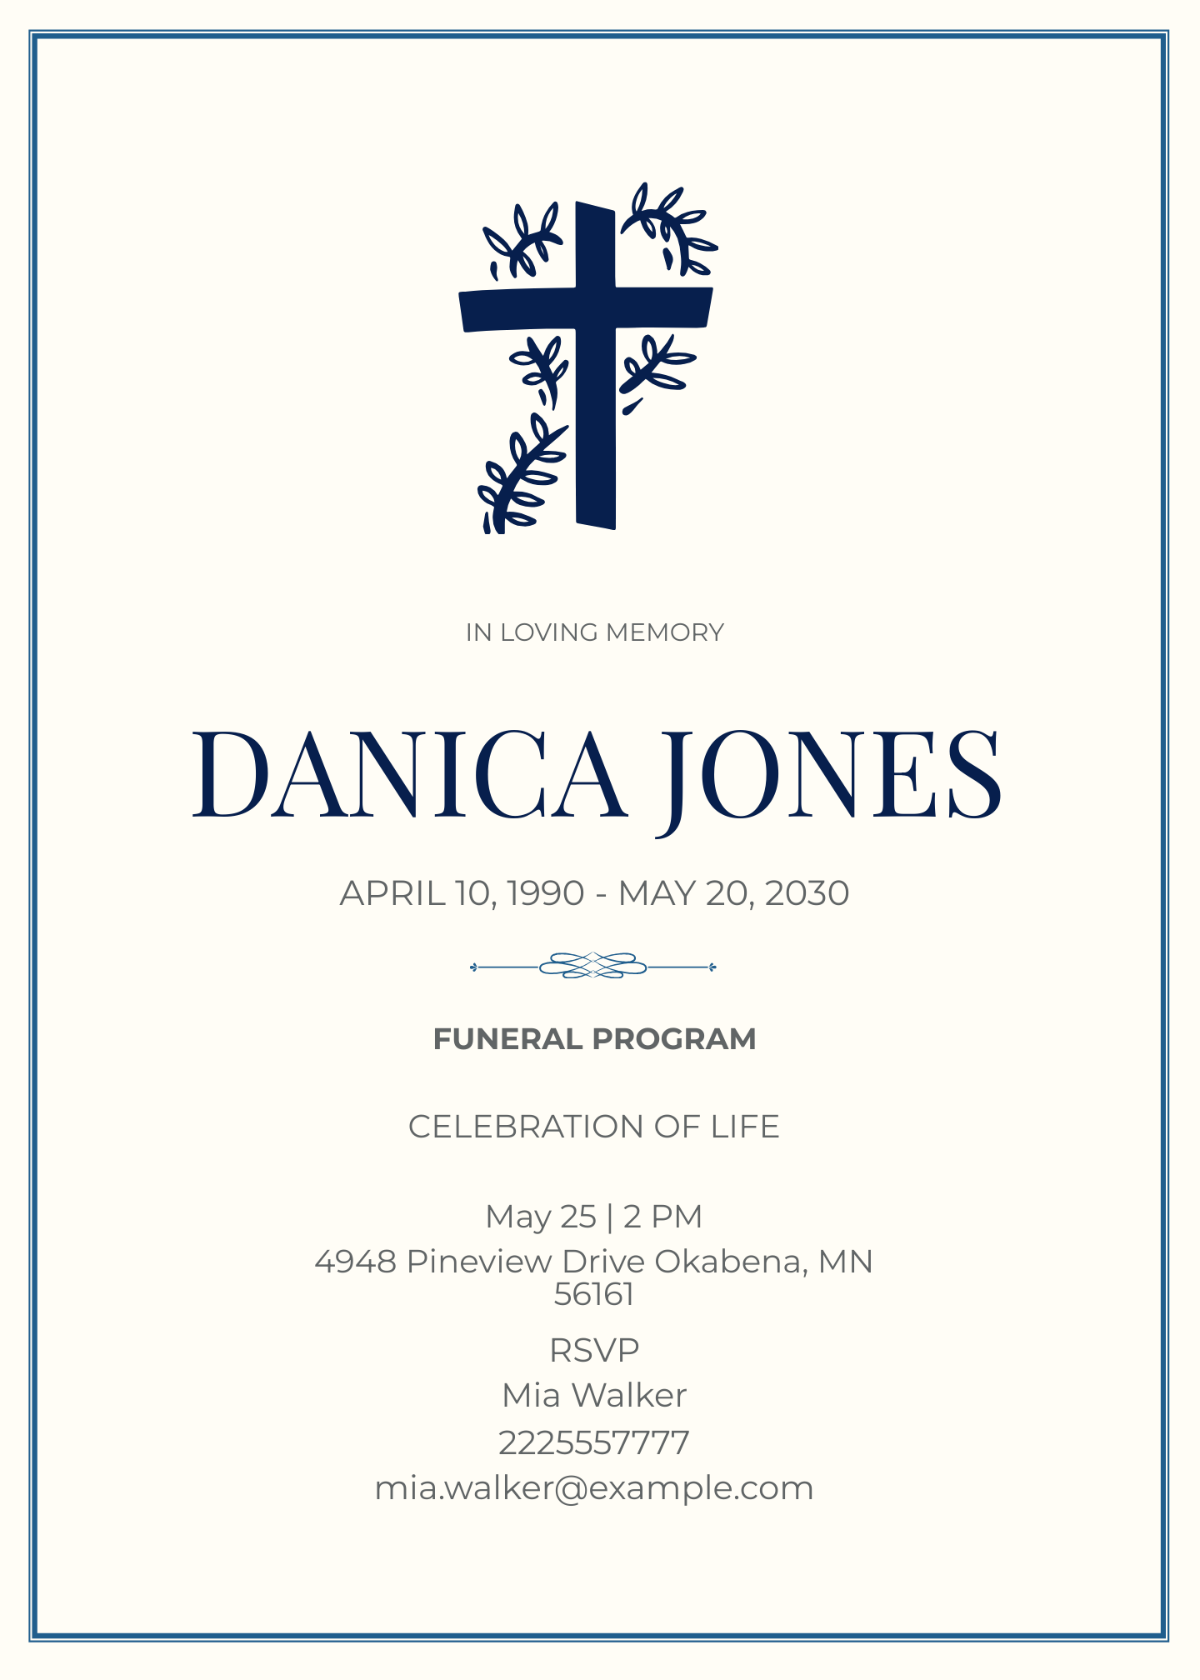 Funeral Church Program Invitation